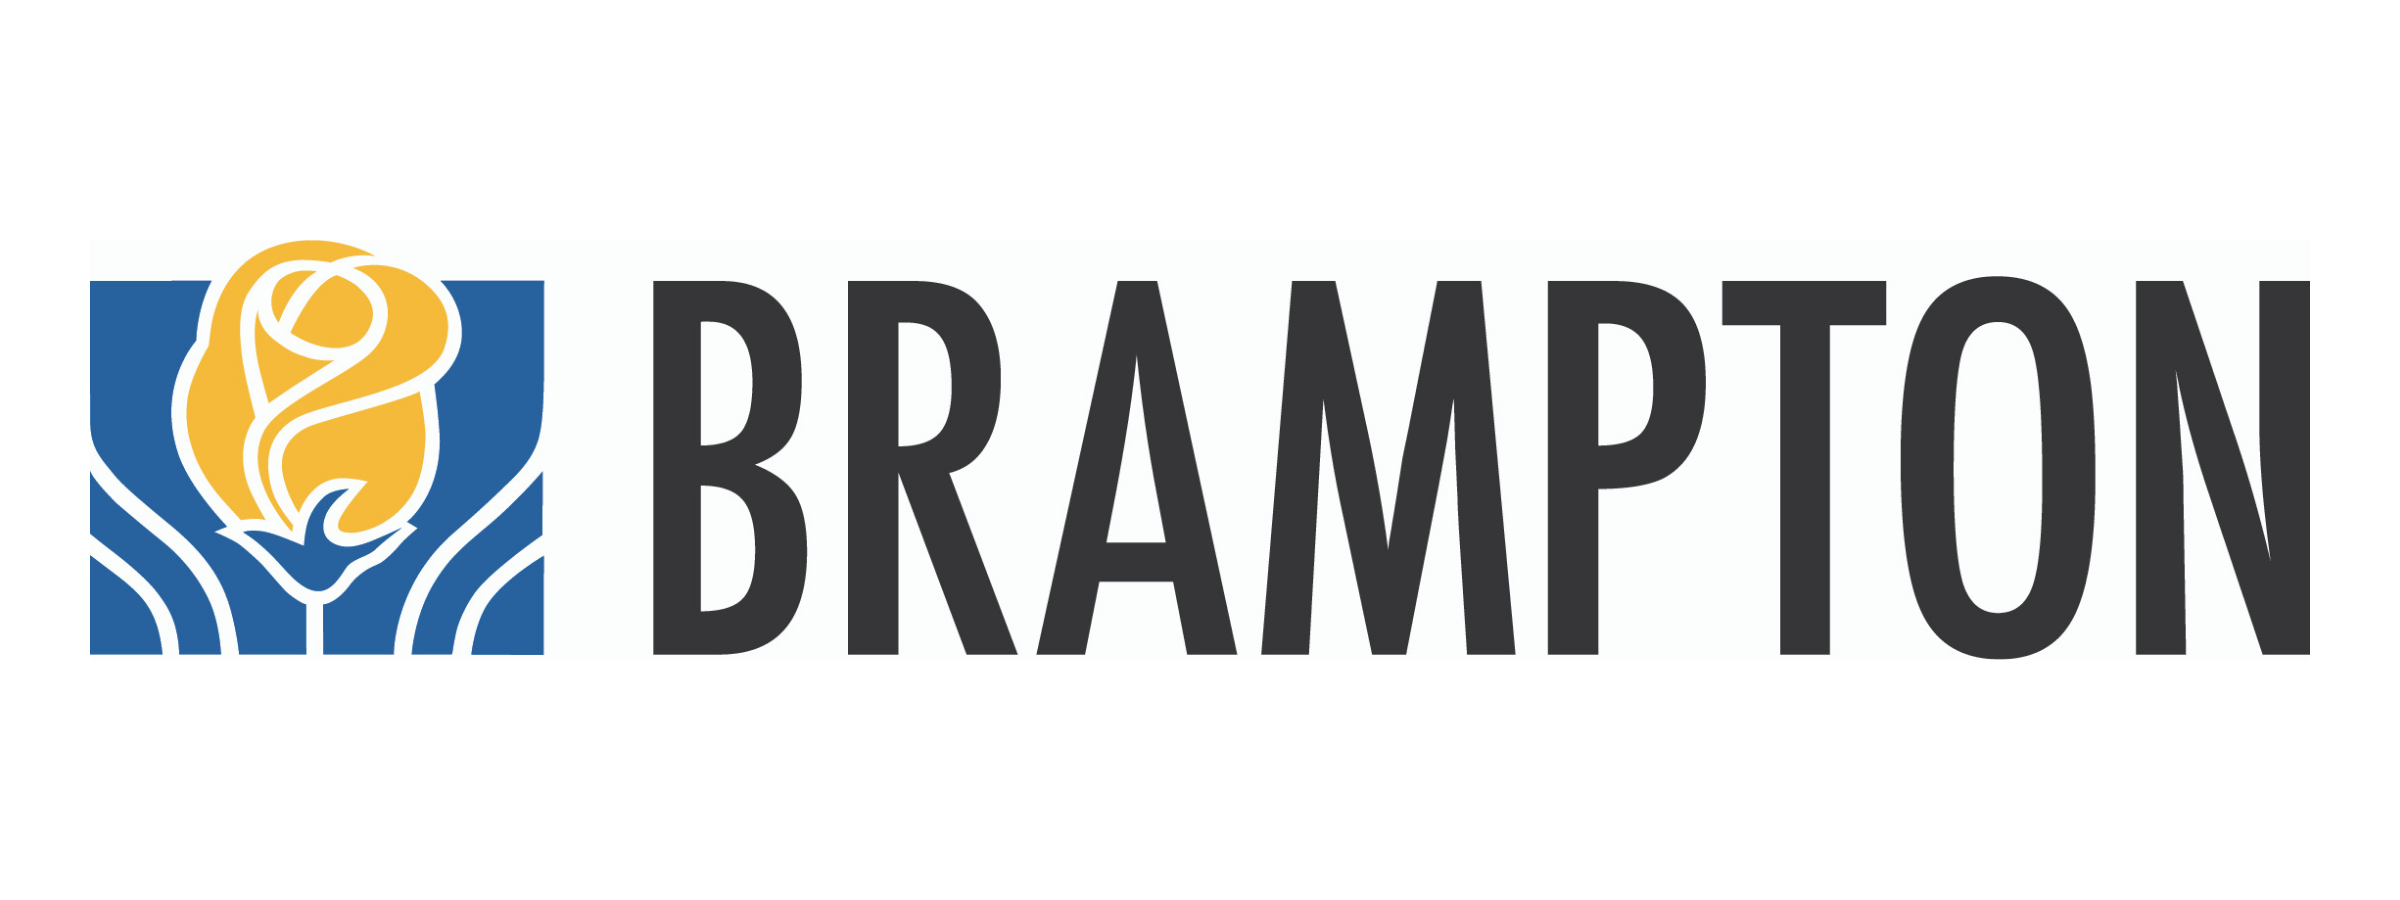 City of Brampton logo with black text